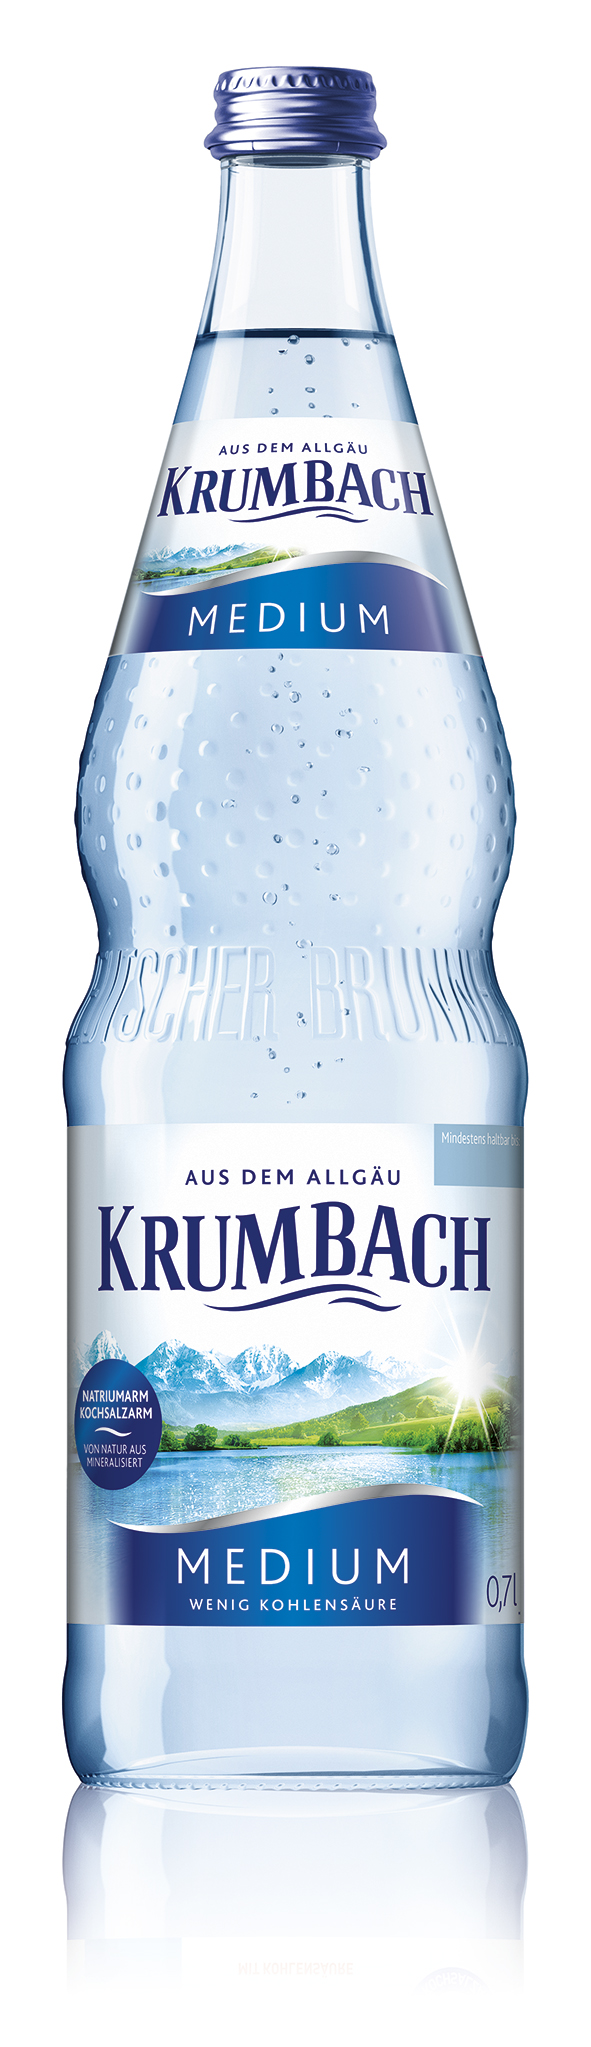 Krumbach Medium